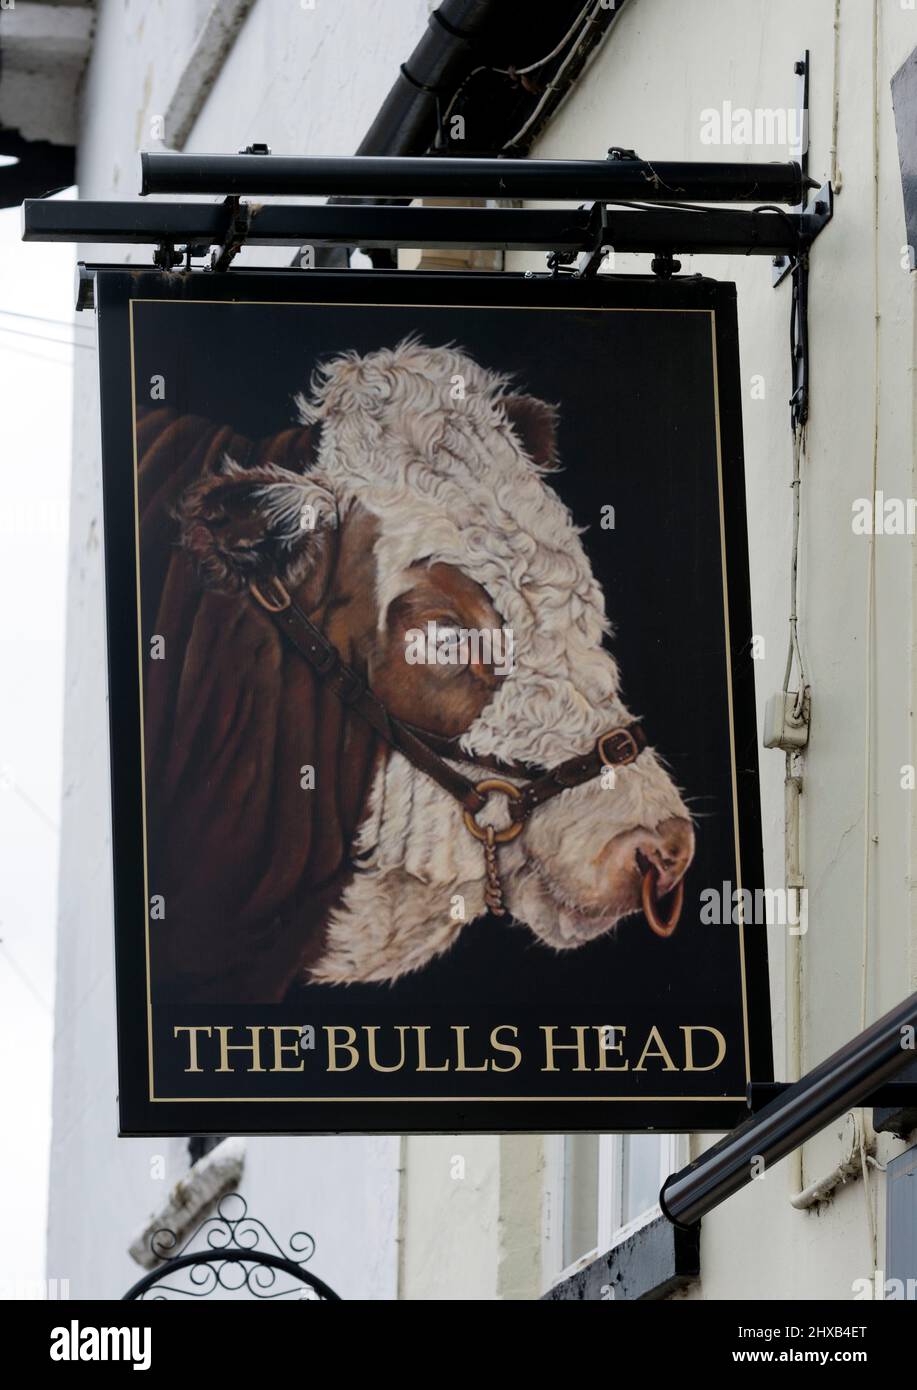 The Bulls Head pub sign, Bidford-on-Avon, Warwickshire, England, UK Stock Photo